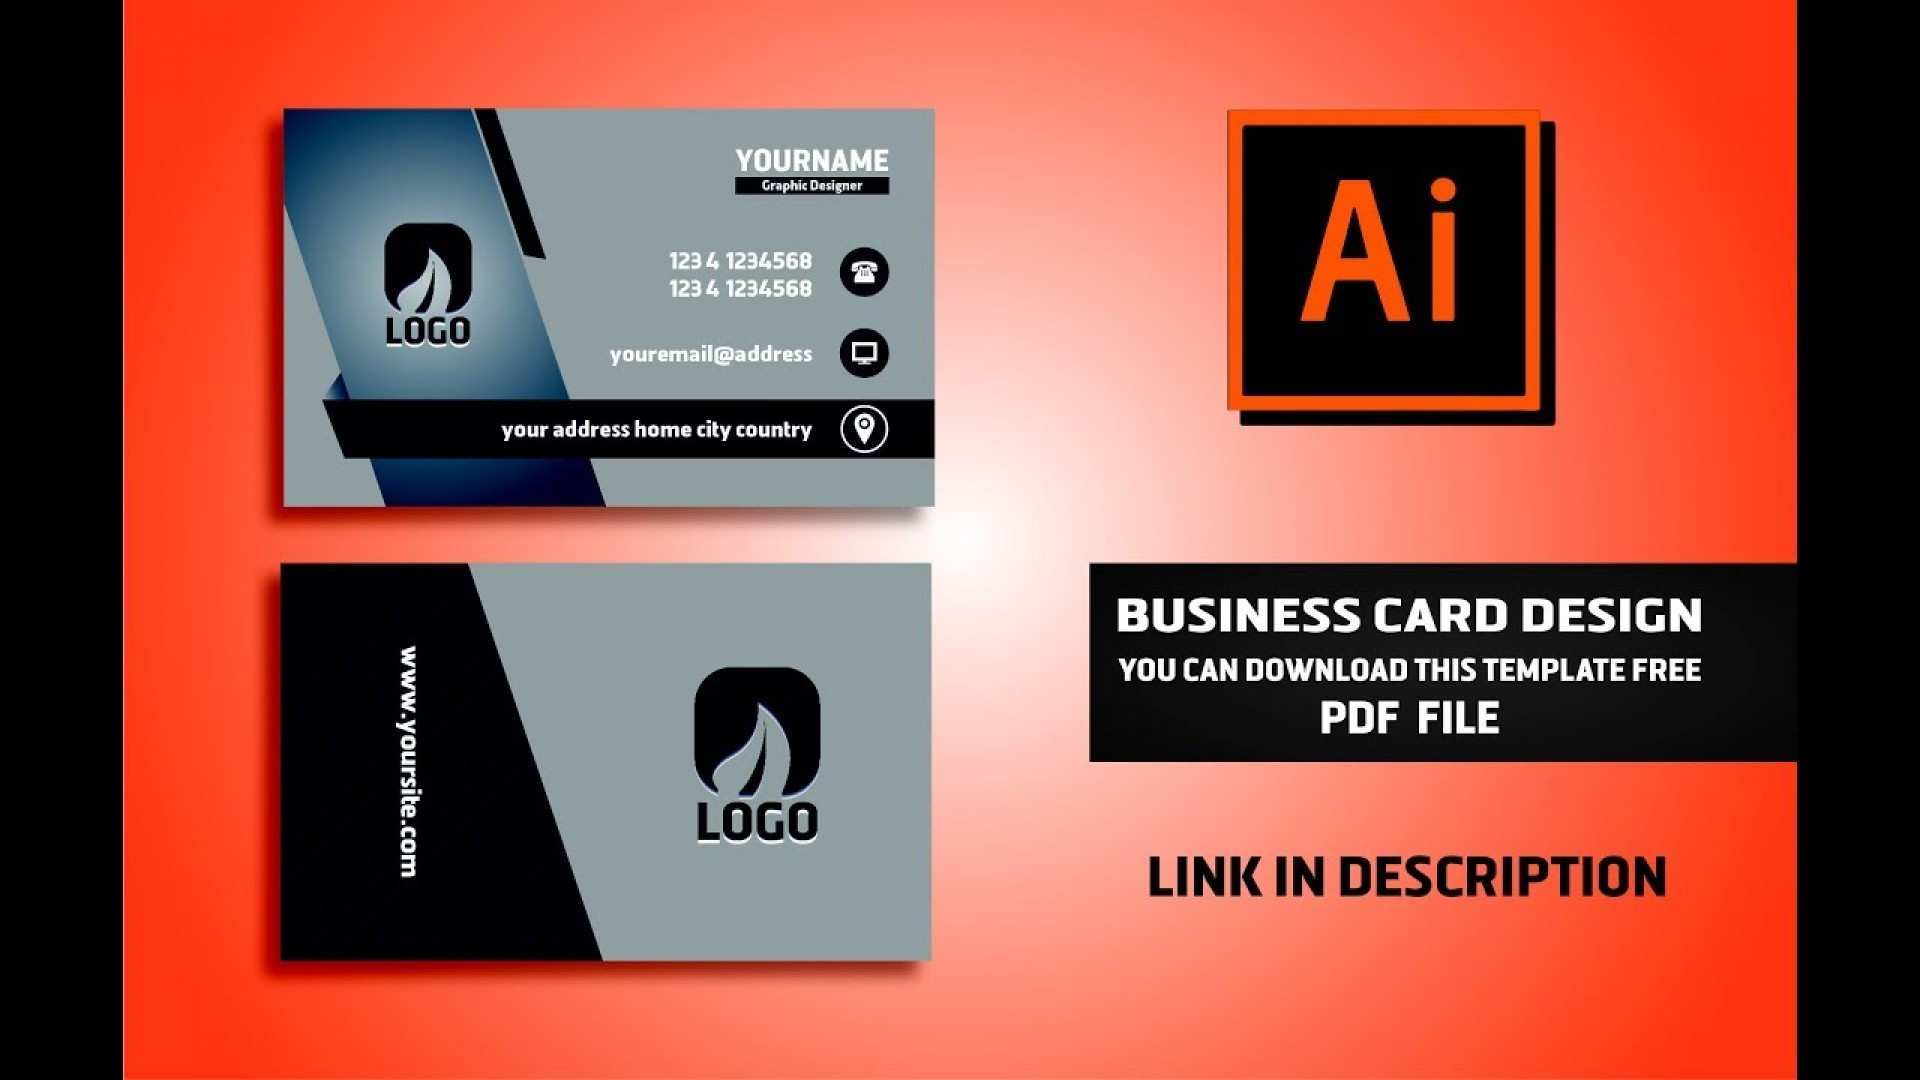 62 Visiting Business Card Design Templates Pdf for Ms Word with Business Card Design Templates Pdf